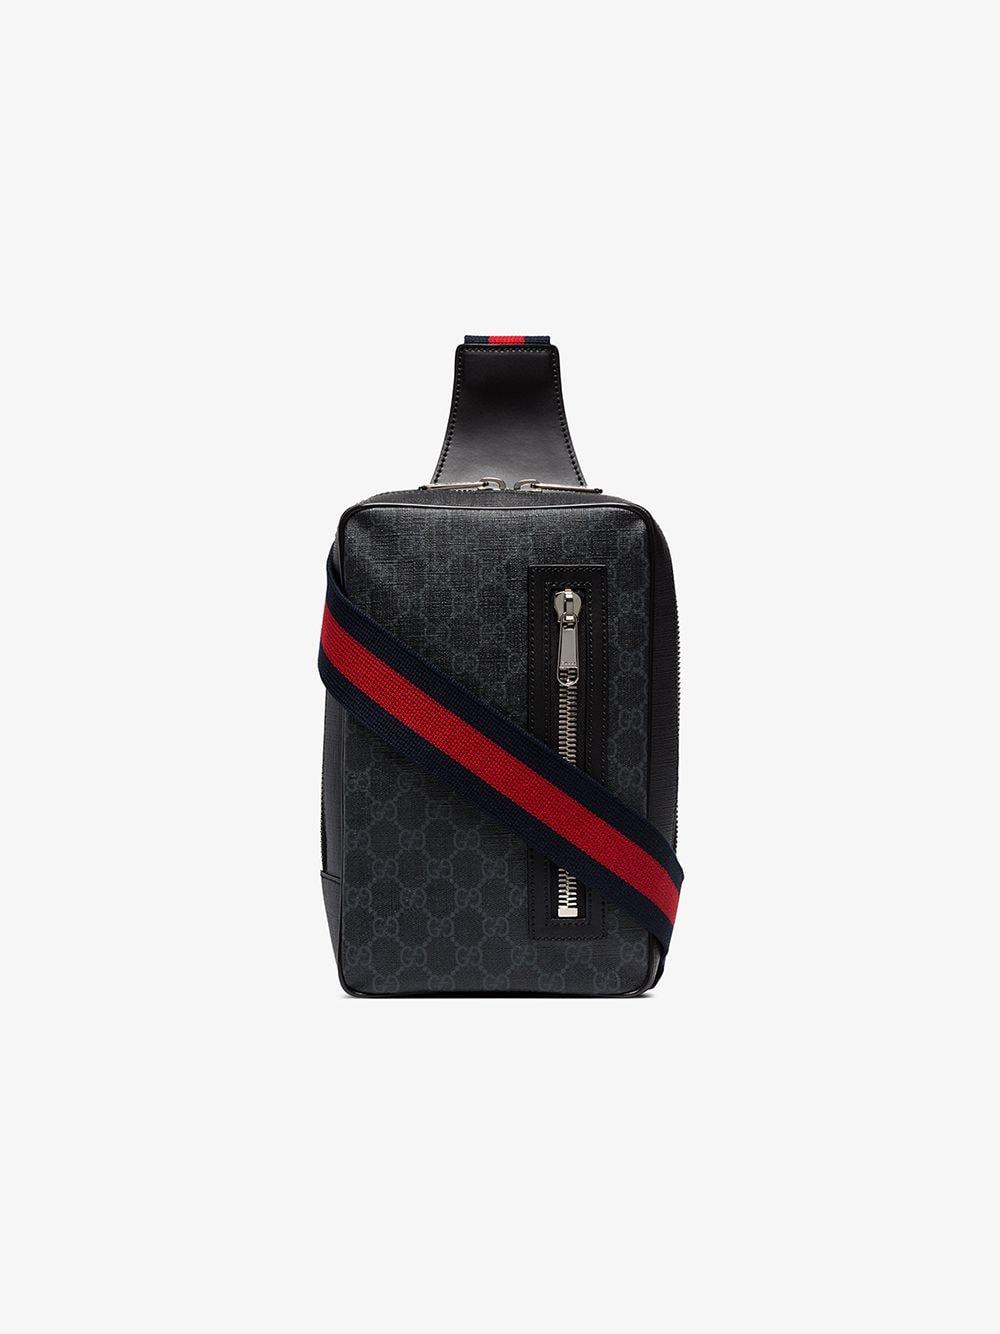 Gucci GG Supreme Cotton Cross Body Bag in Black for Men - Lyst